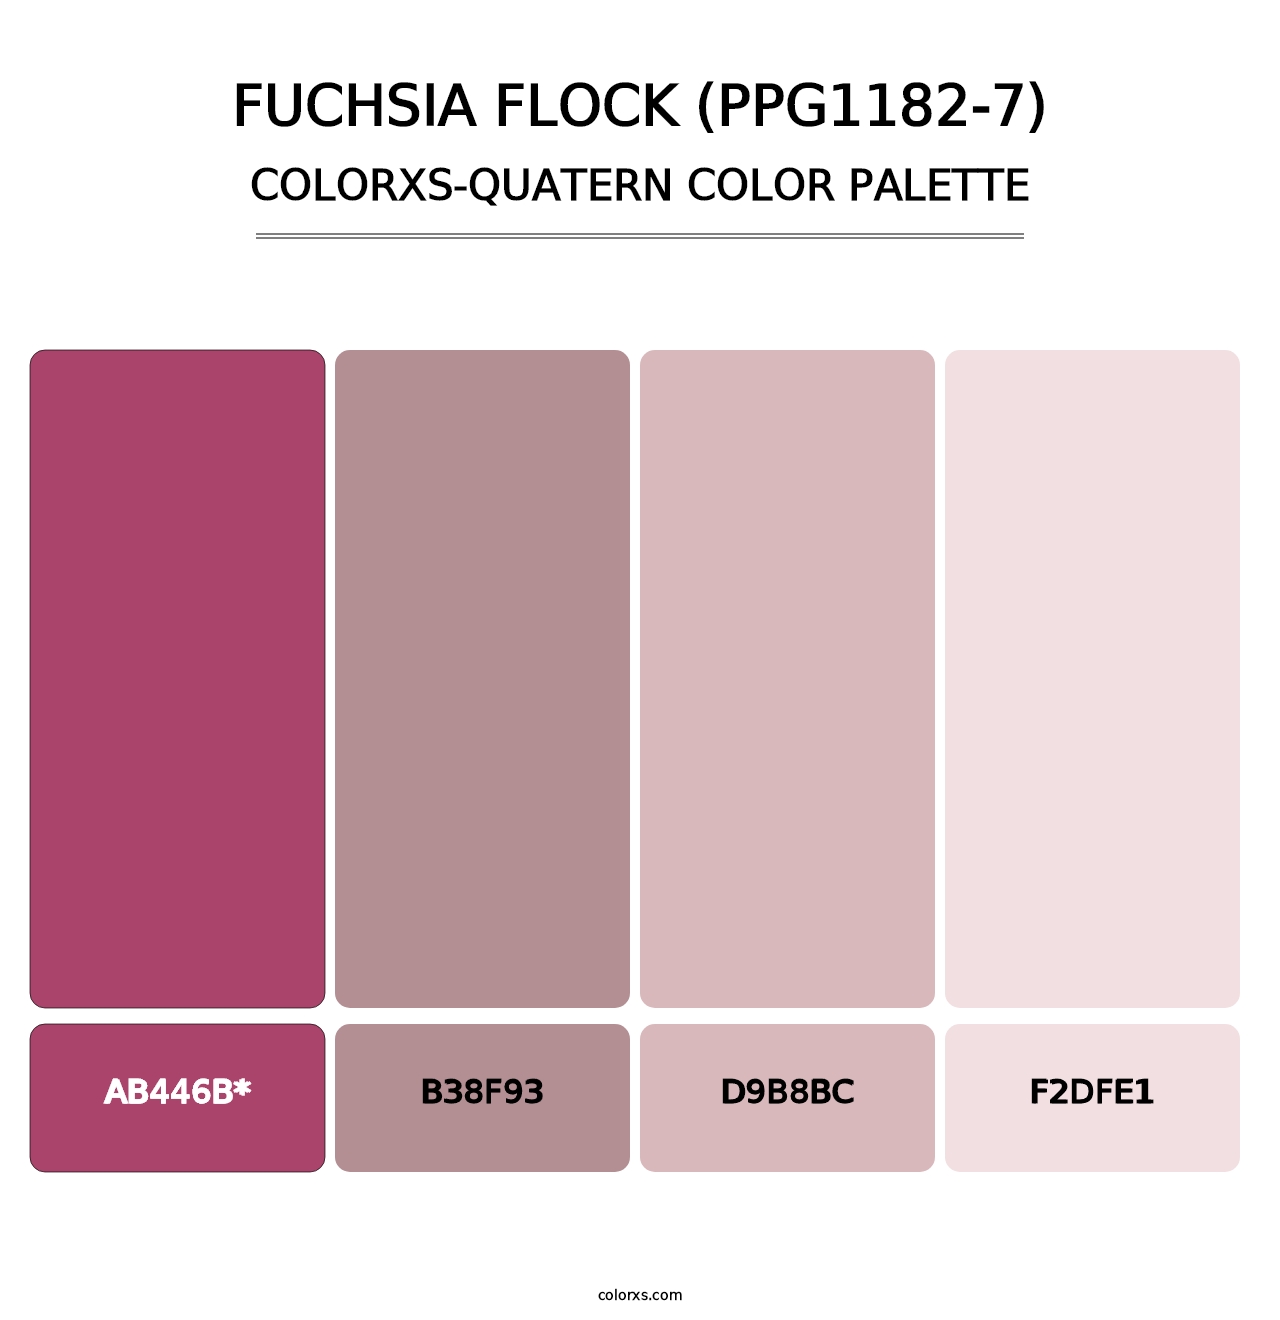 Fuchsia Flock (PPG1182-7) - Colorxs Quatern Palette